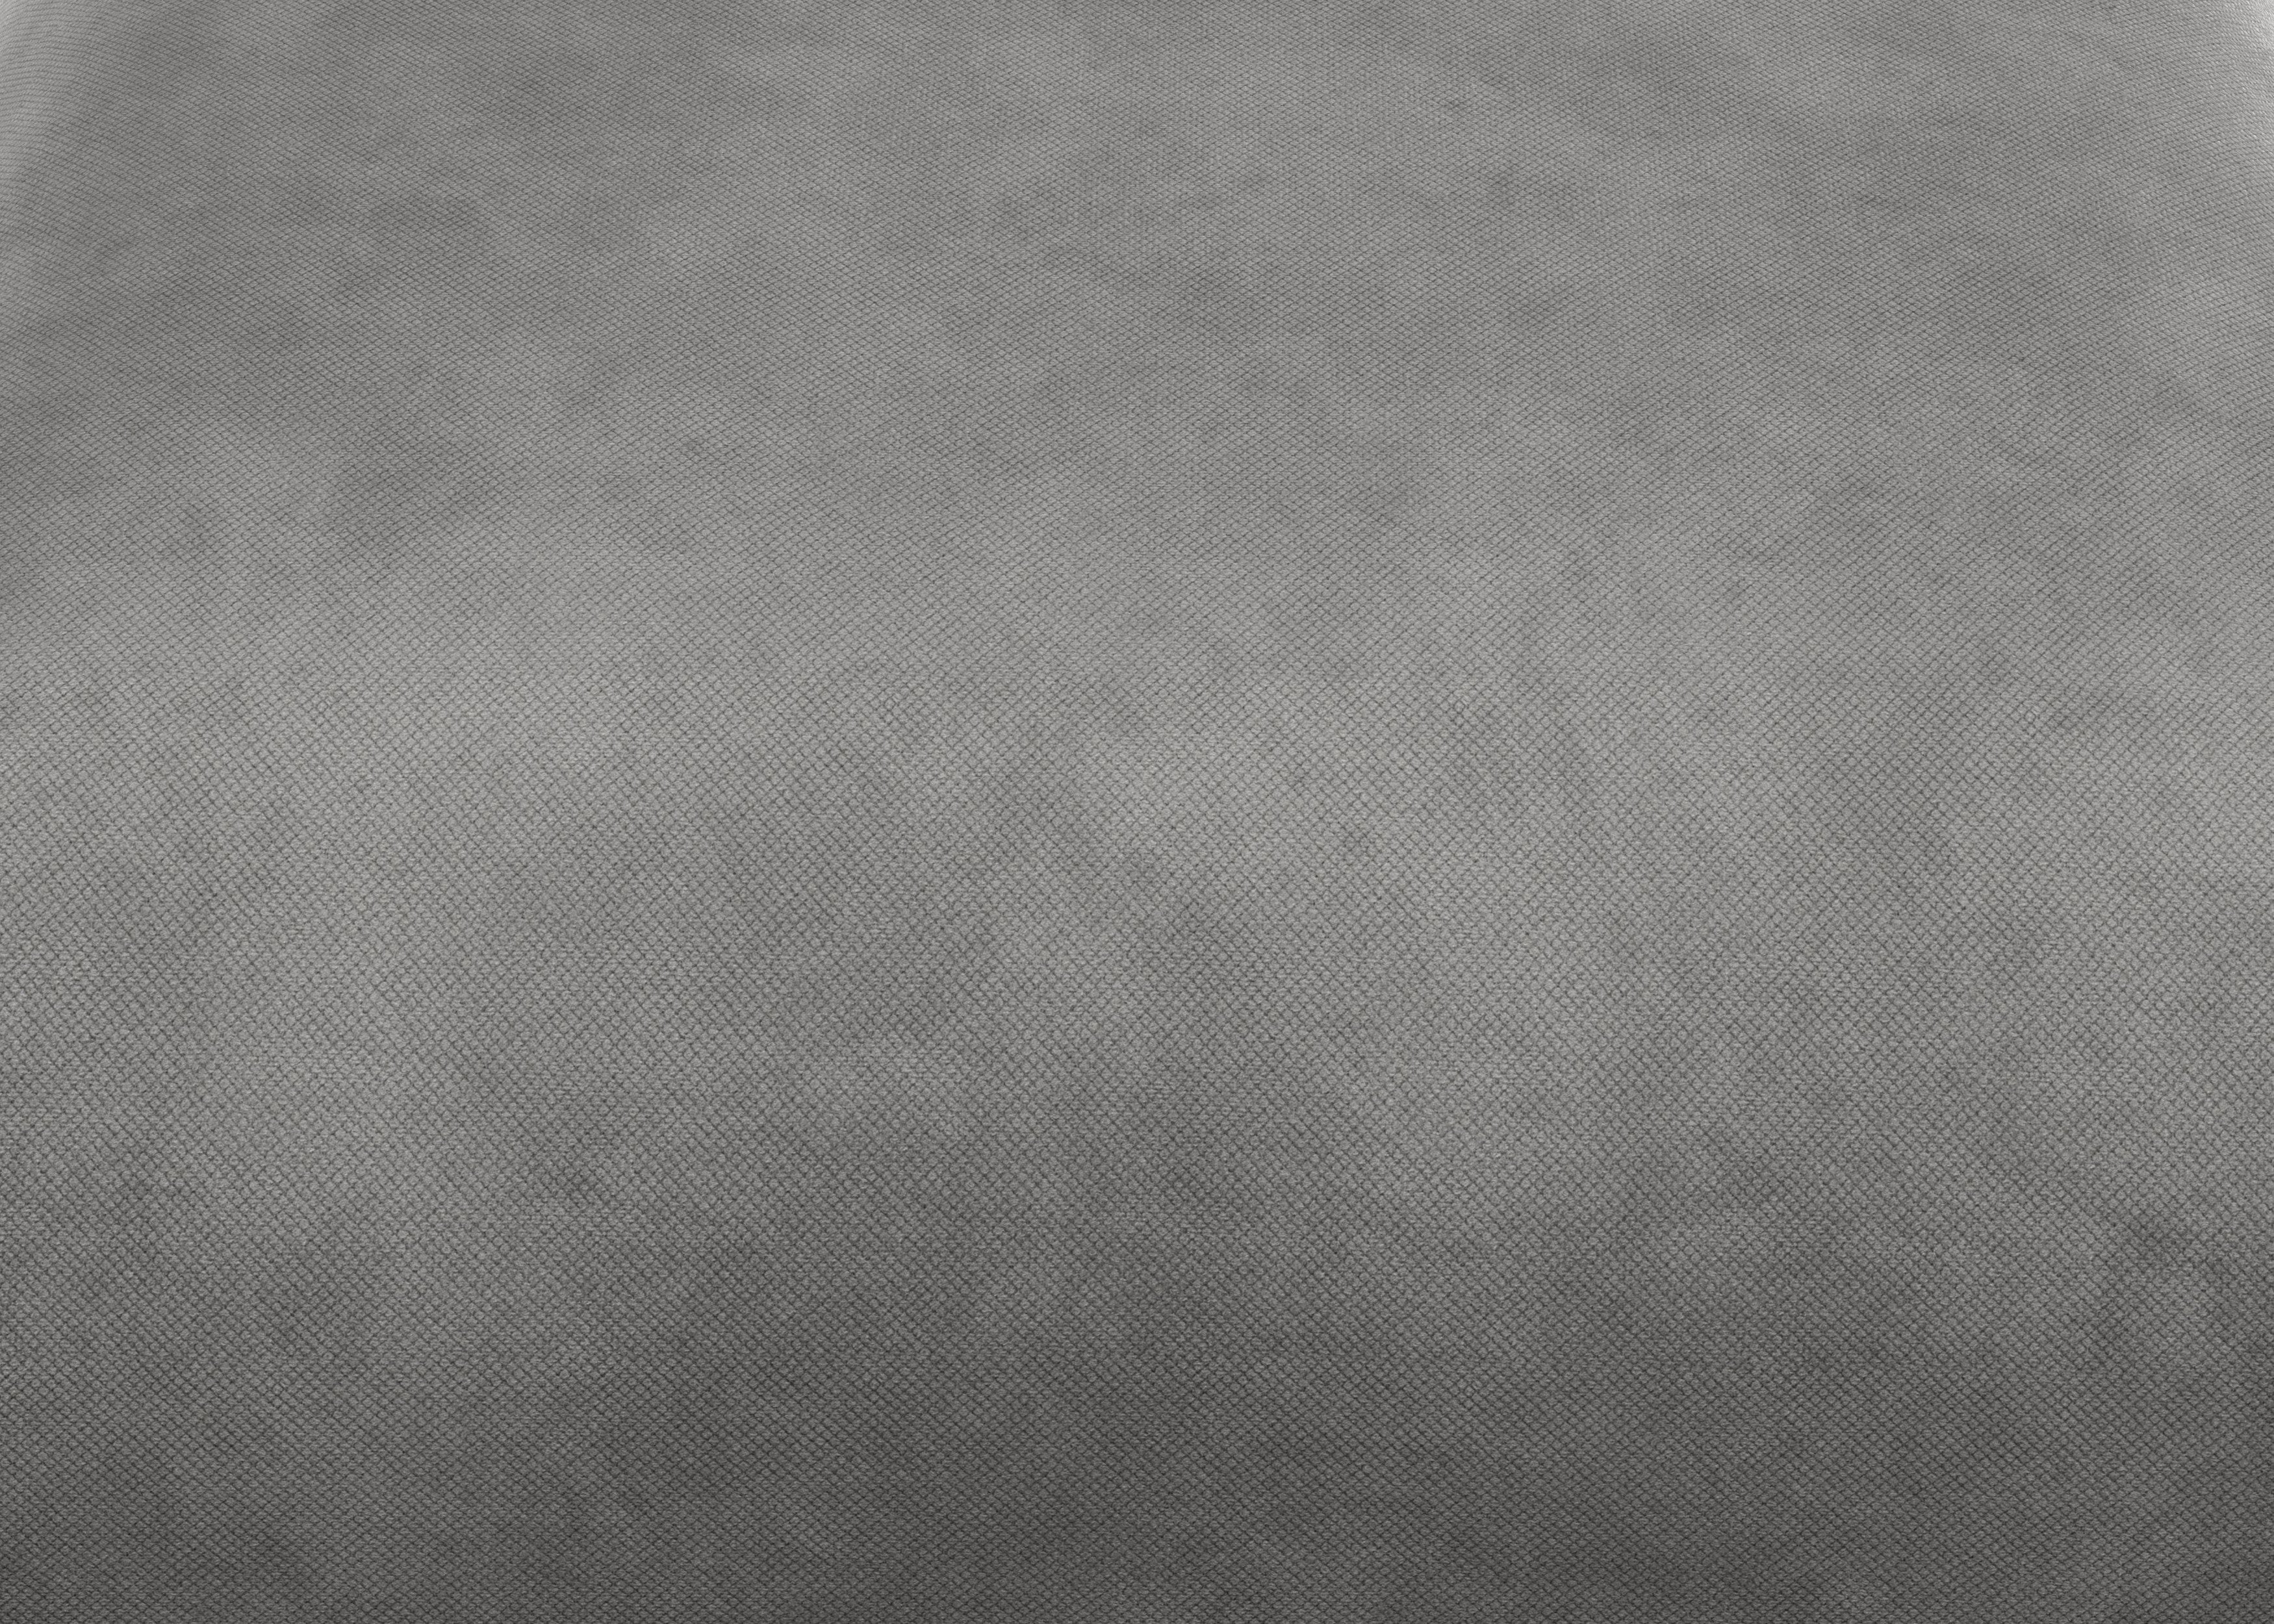 vetsak®-Sofa Seat 105x84 Velvet dark grey